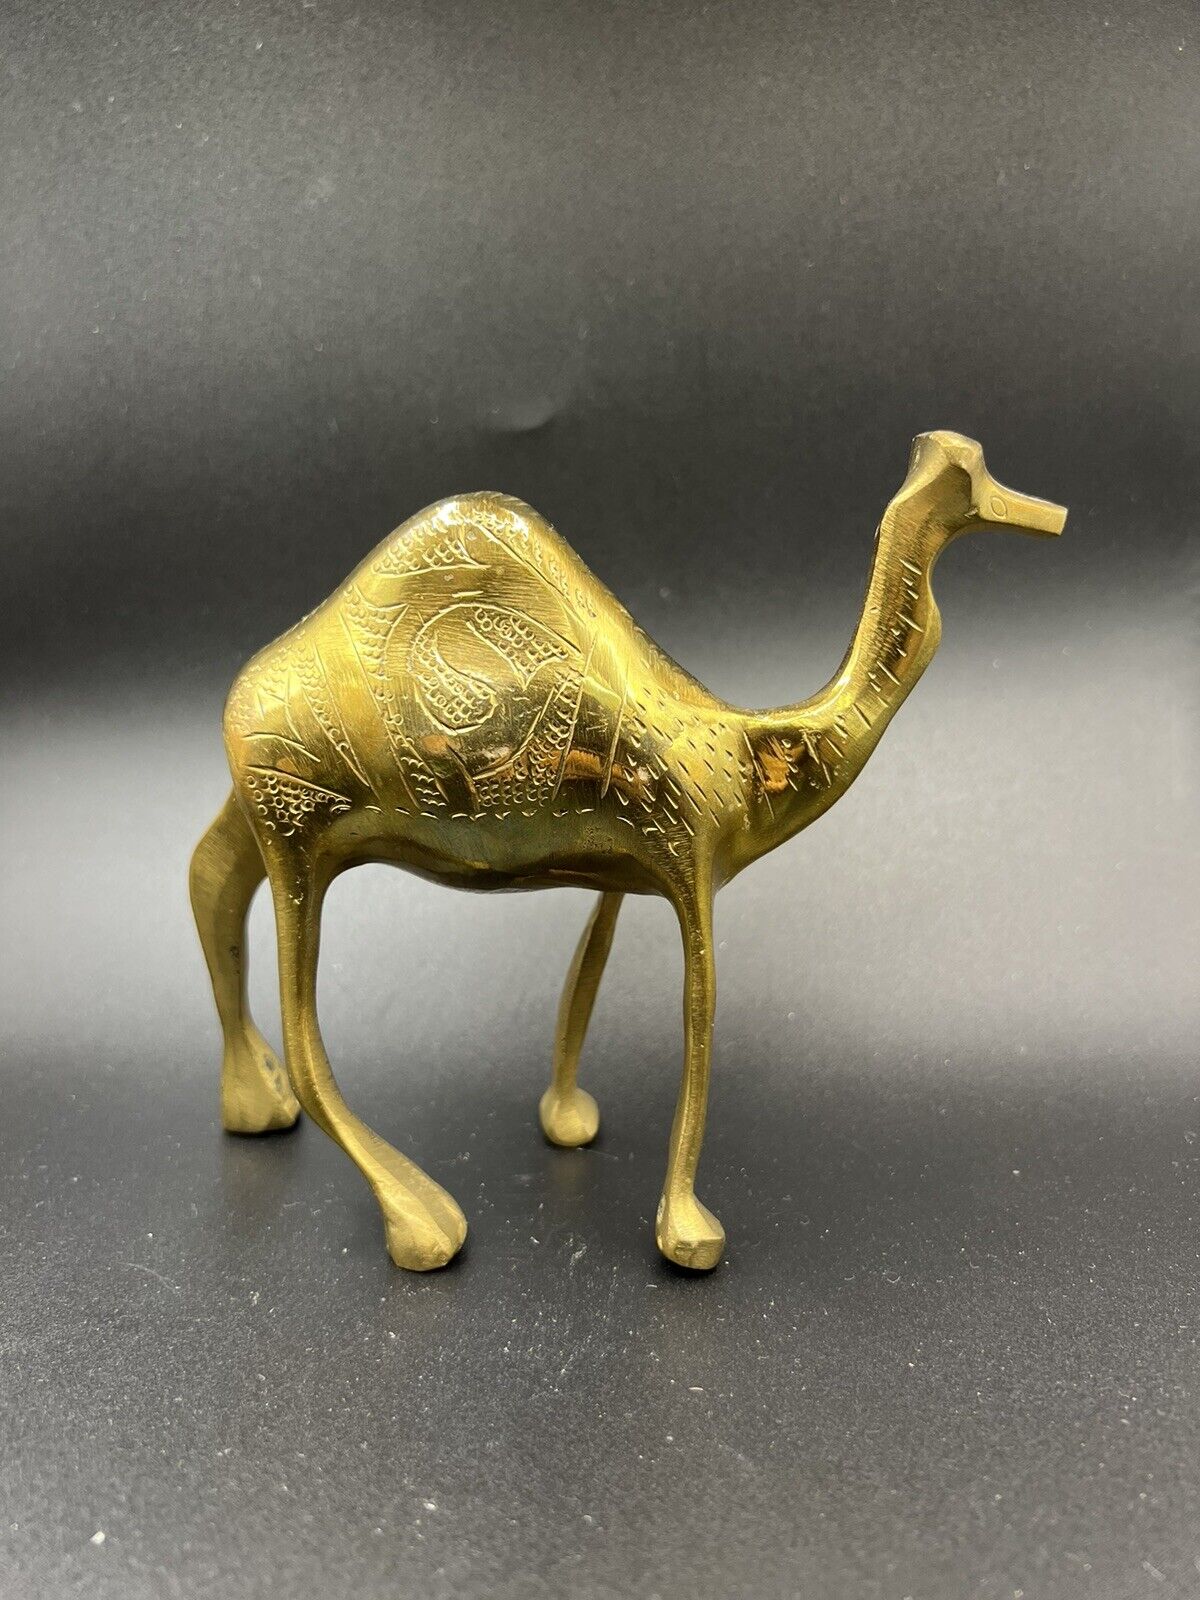 Vintage Ornate Etched Solid Brass Camel Mid Century Home Decor Figure 5”